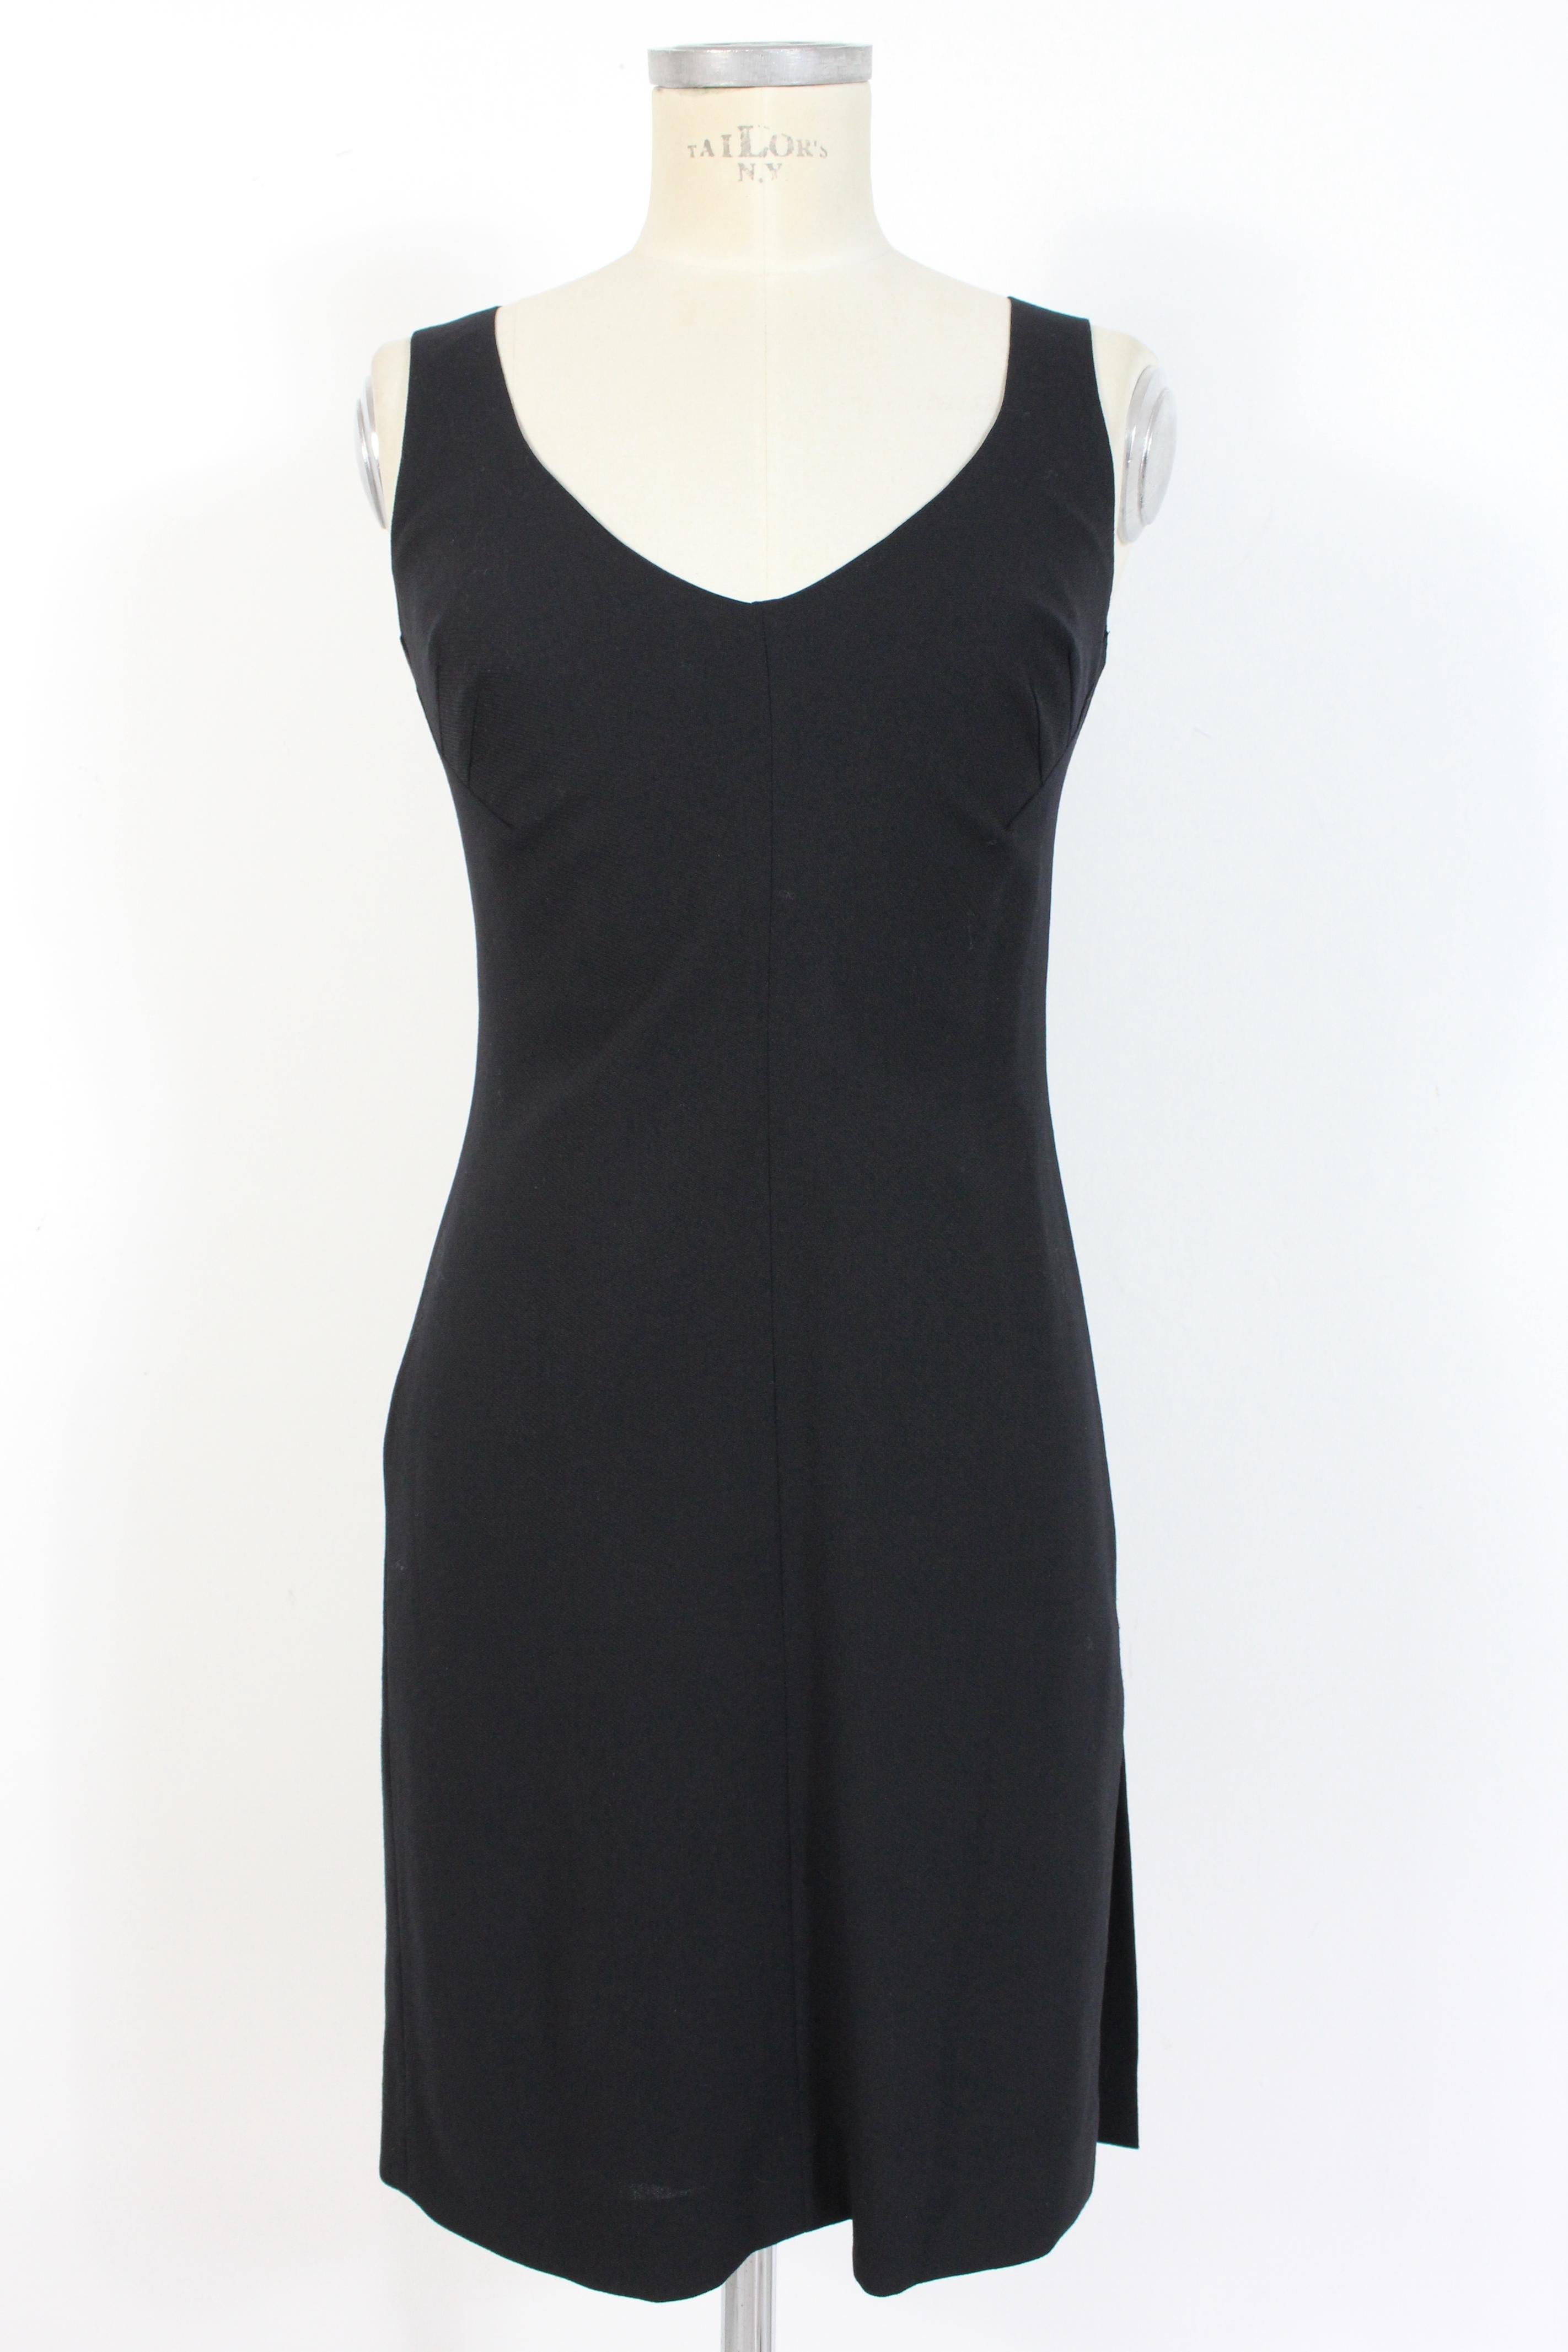 Gianfranco Ferre Black Wool Evening Suit Dress 1